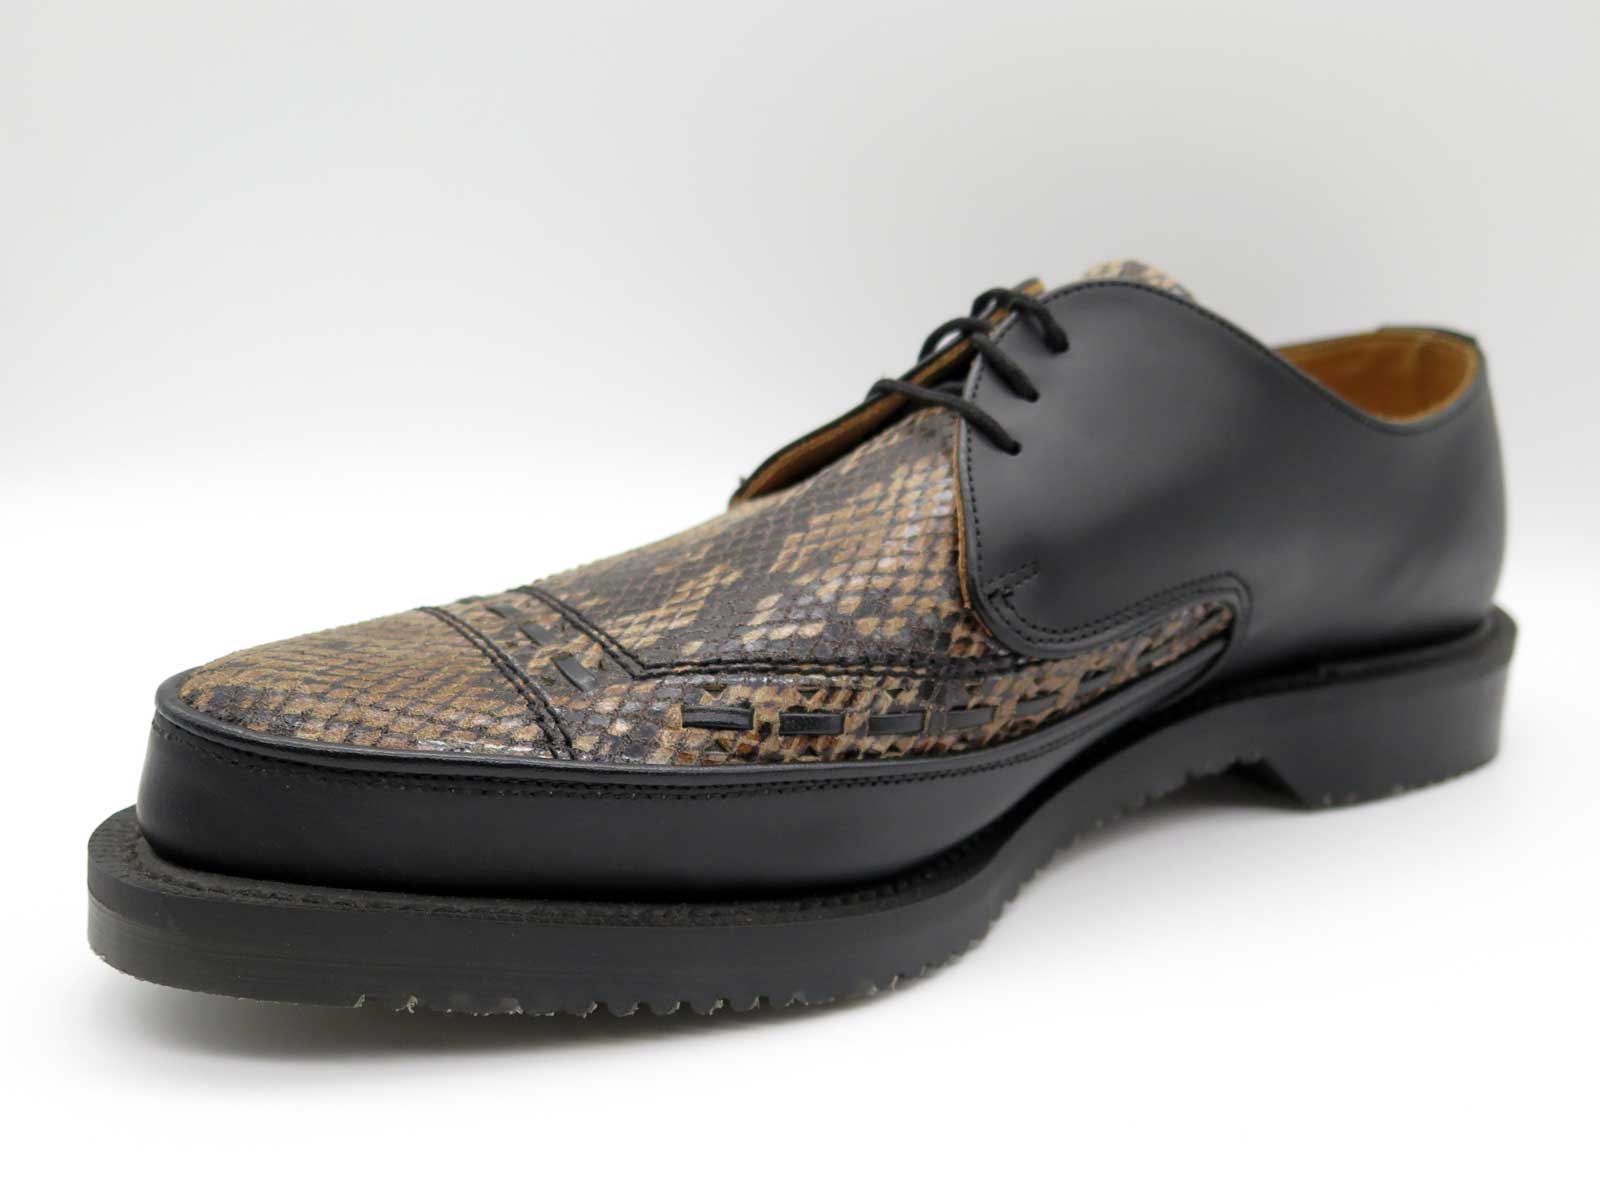 Diano Leather Gibson Heatseal Shoe (snake skin)